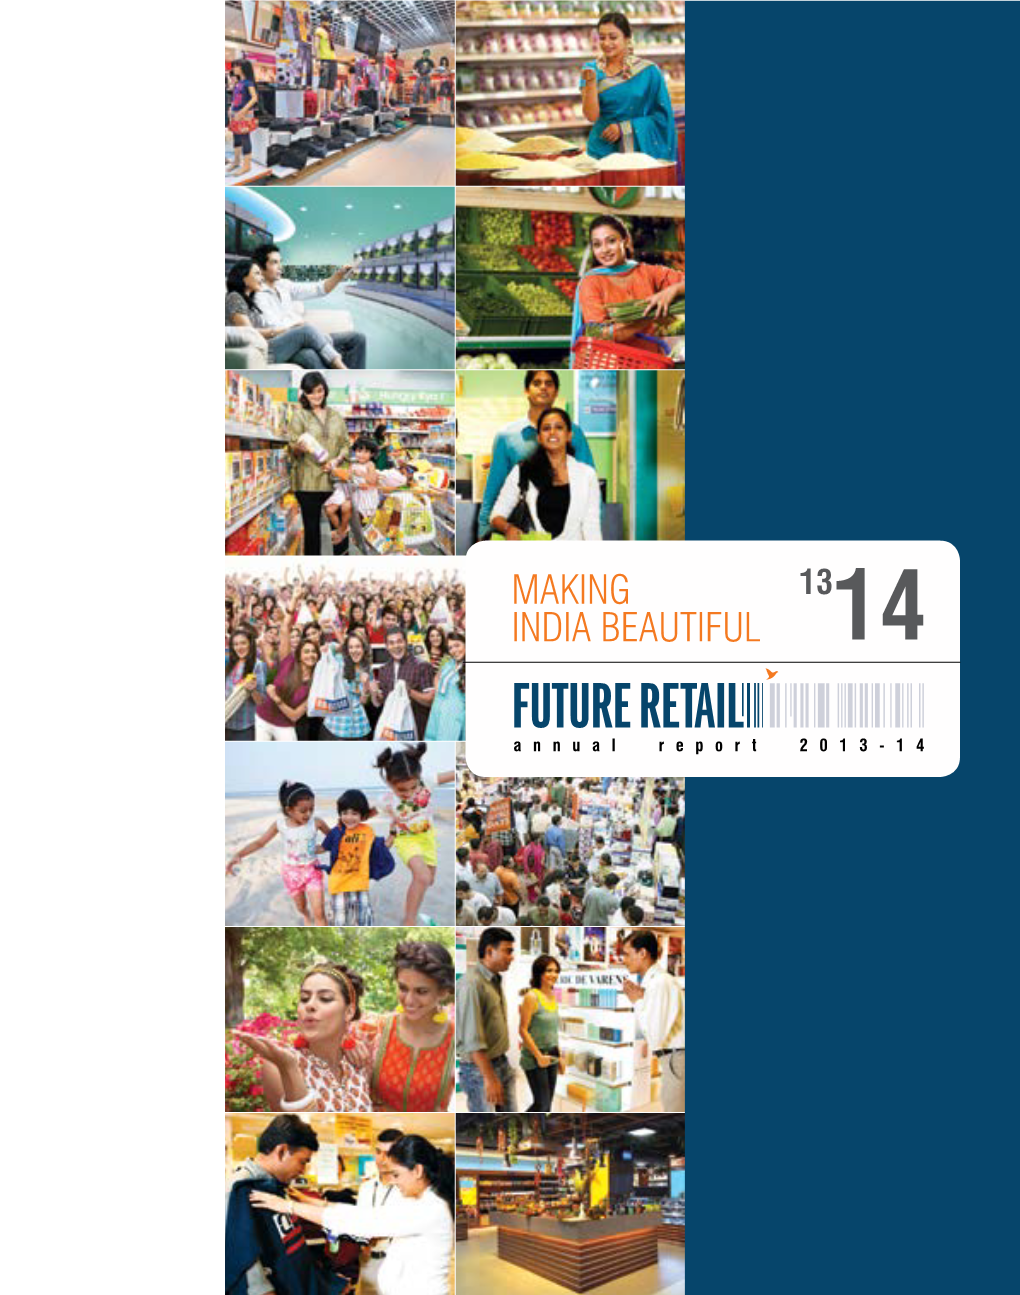 Annual Report 2013-14 MAKING INDIA BEAUTIFUL